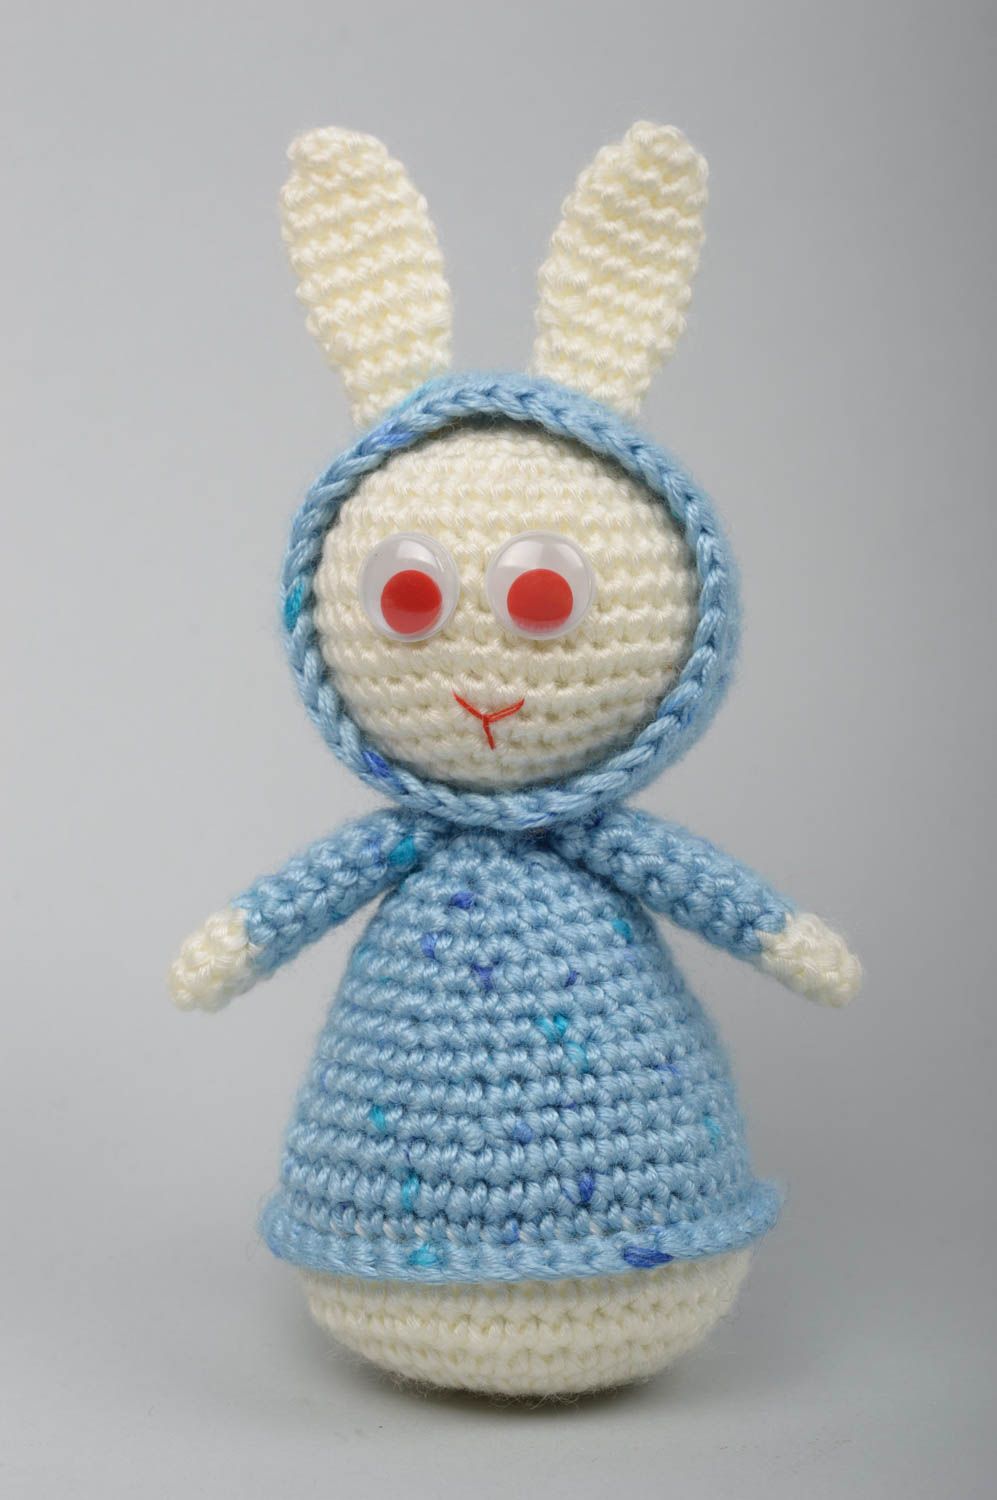 Beautiful handmade crochet toy stuffed toy hare interior decorating gift ideas photo 1